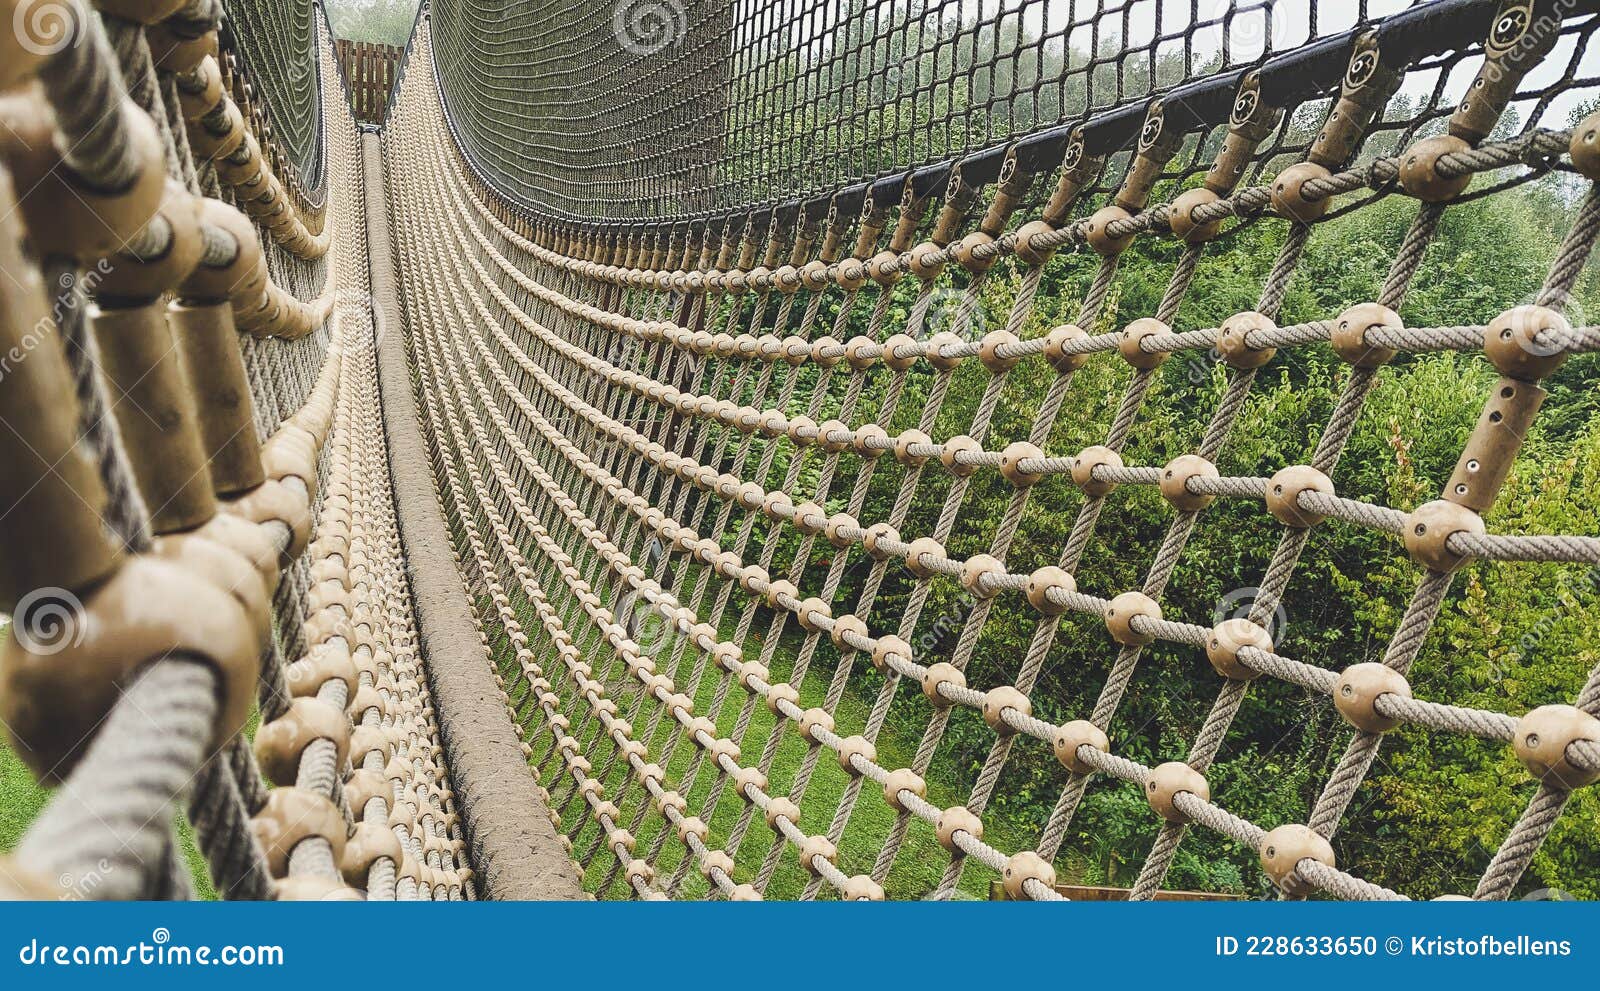 145 Rope Net Suspension Bridge Stock Photos - Free & Royalty-Free